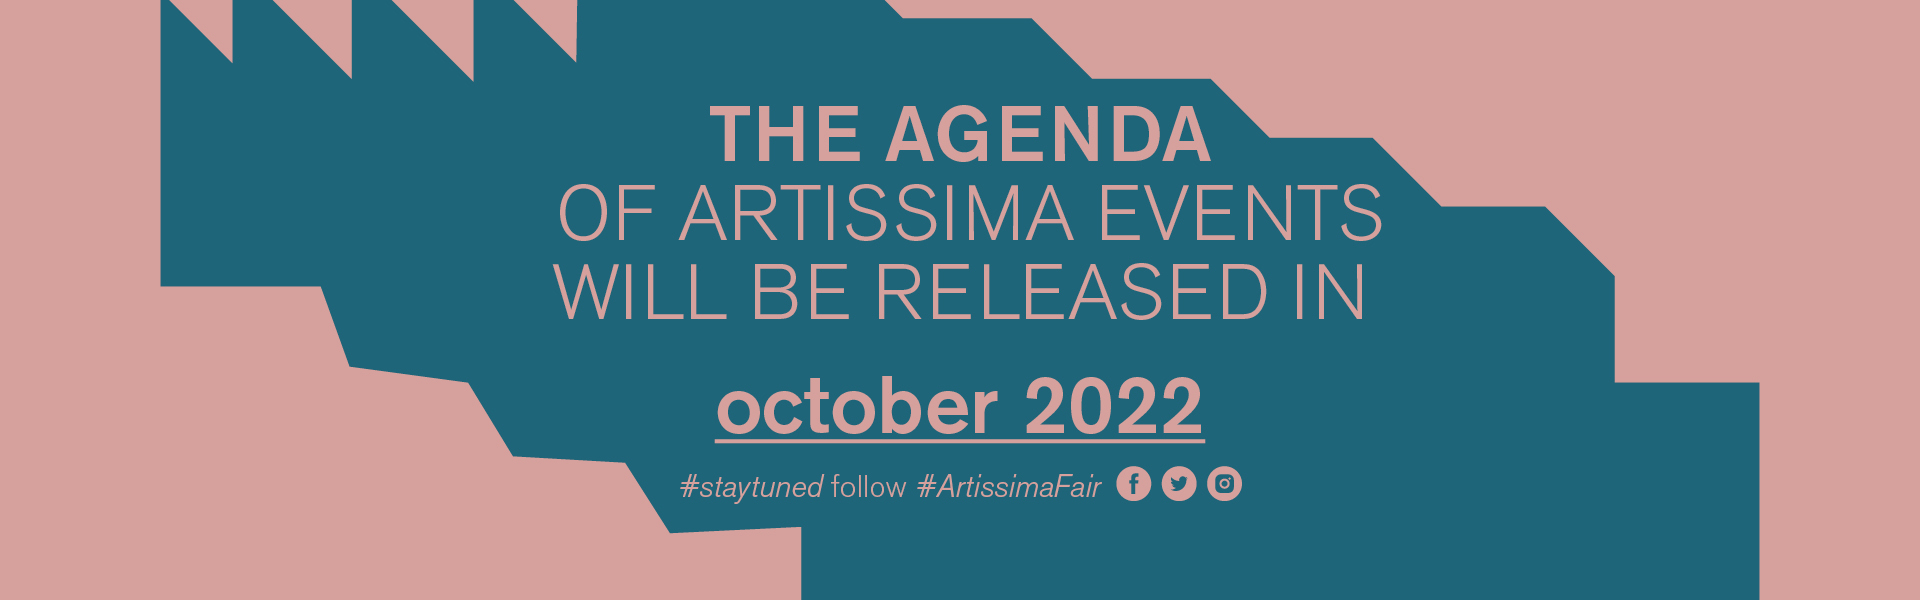 Agenda artissima 2020